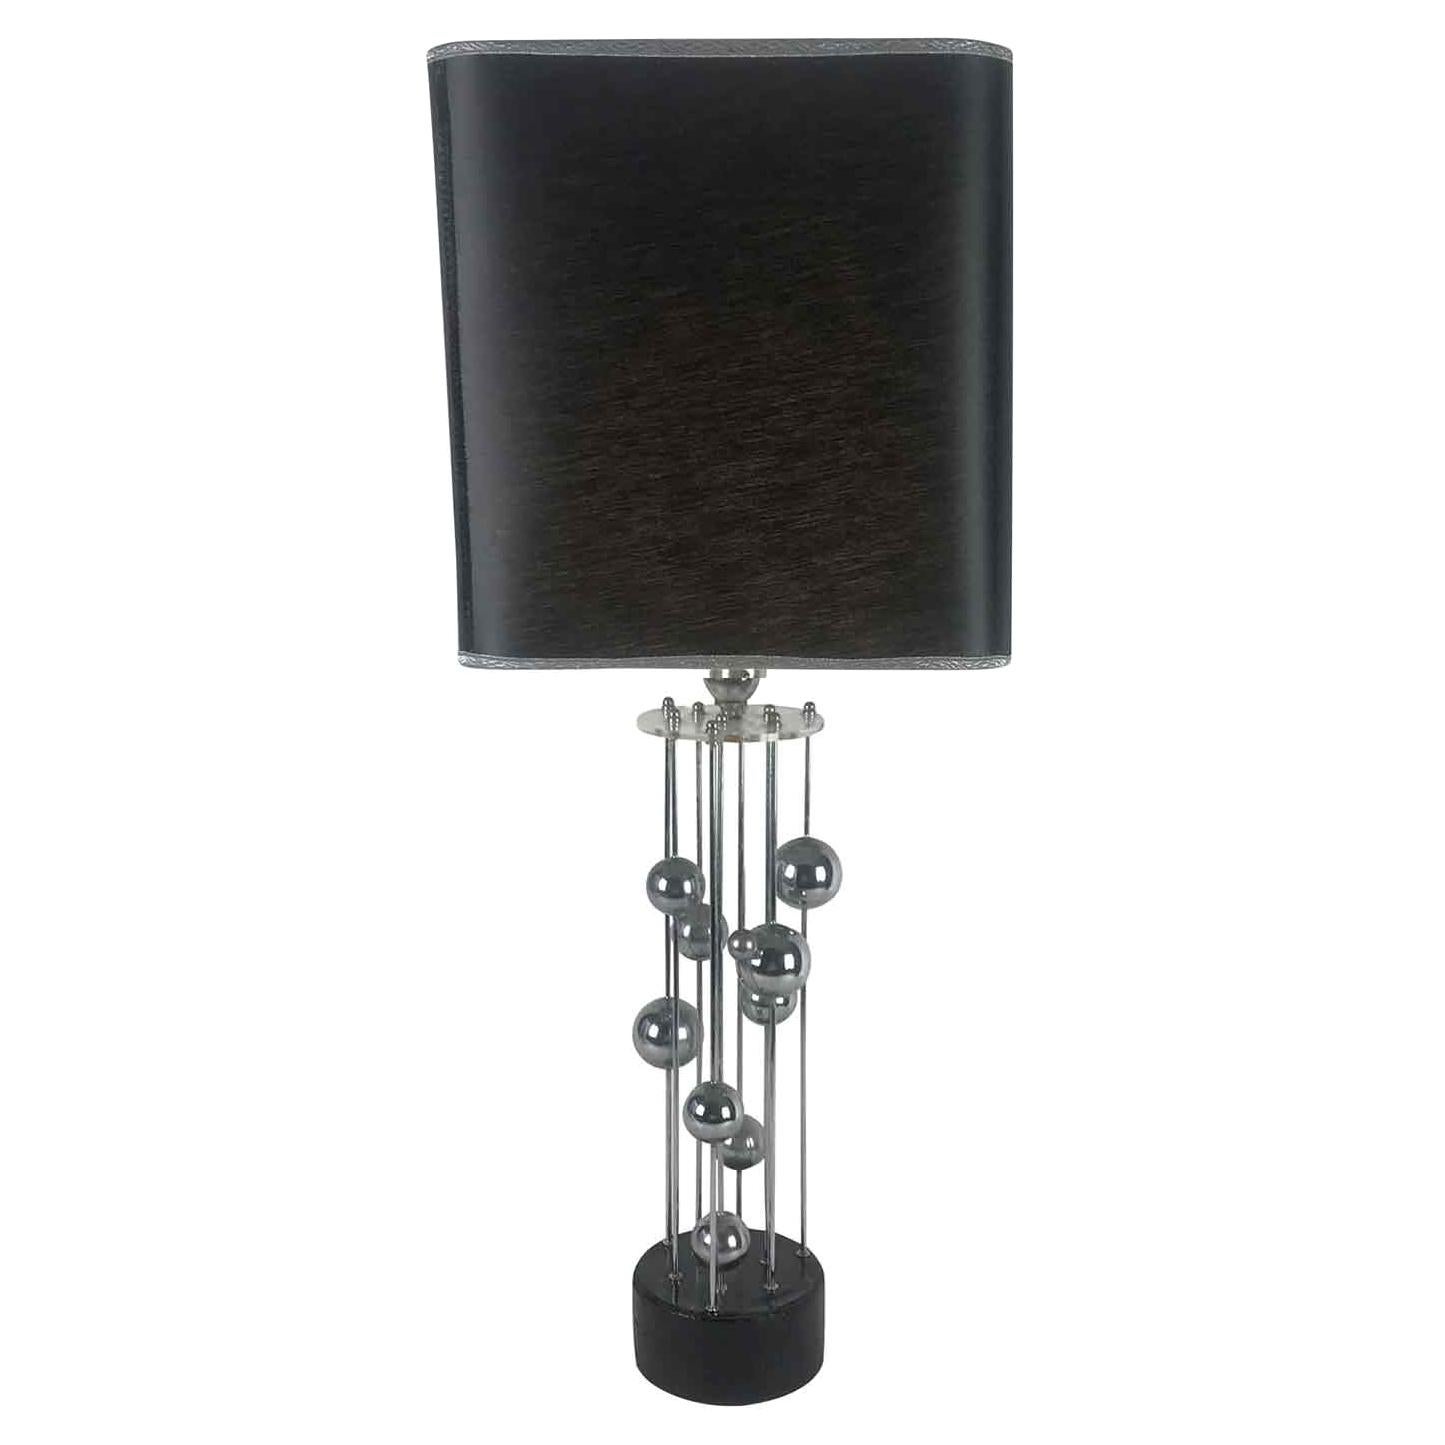 20th Century Banci Firenze Table Lamp Chromed Steel  Italian Lamp  Black Shade For Sale